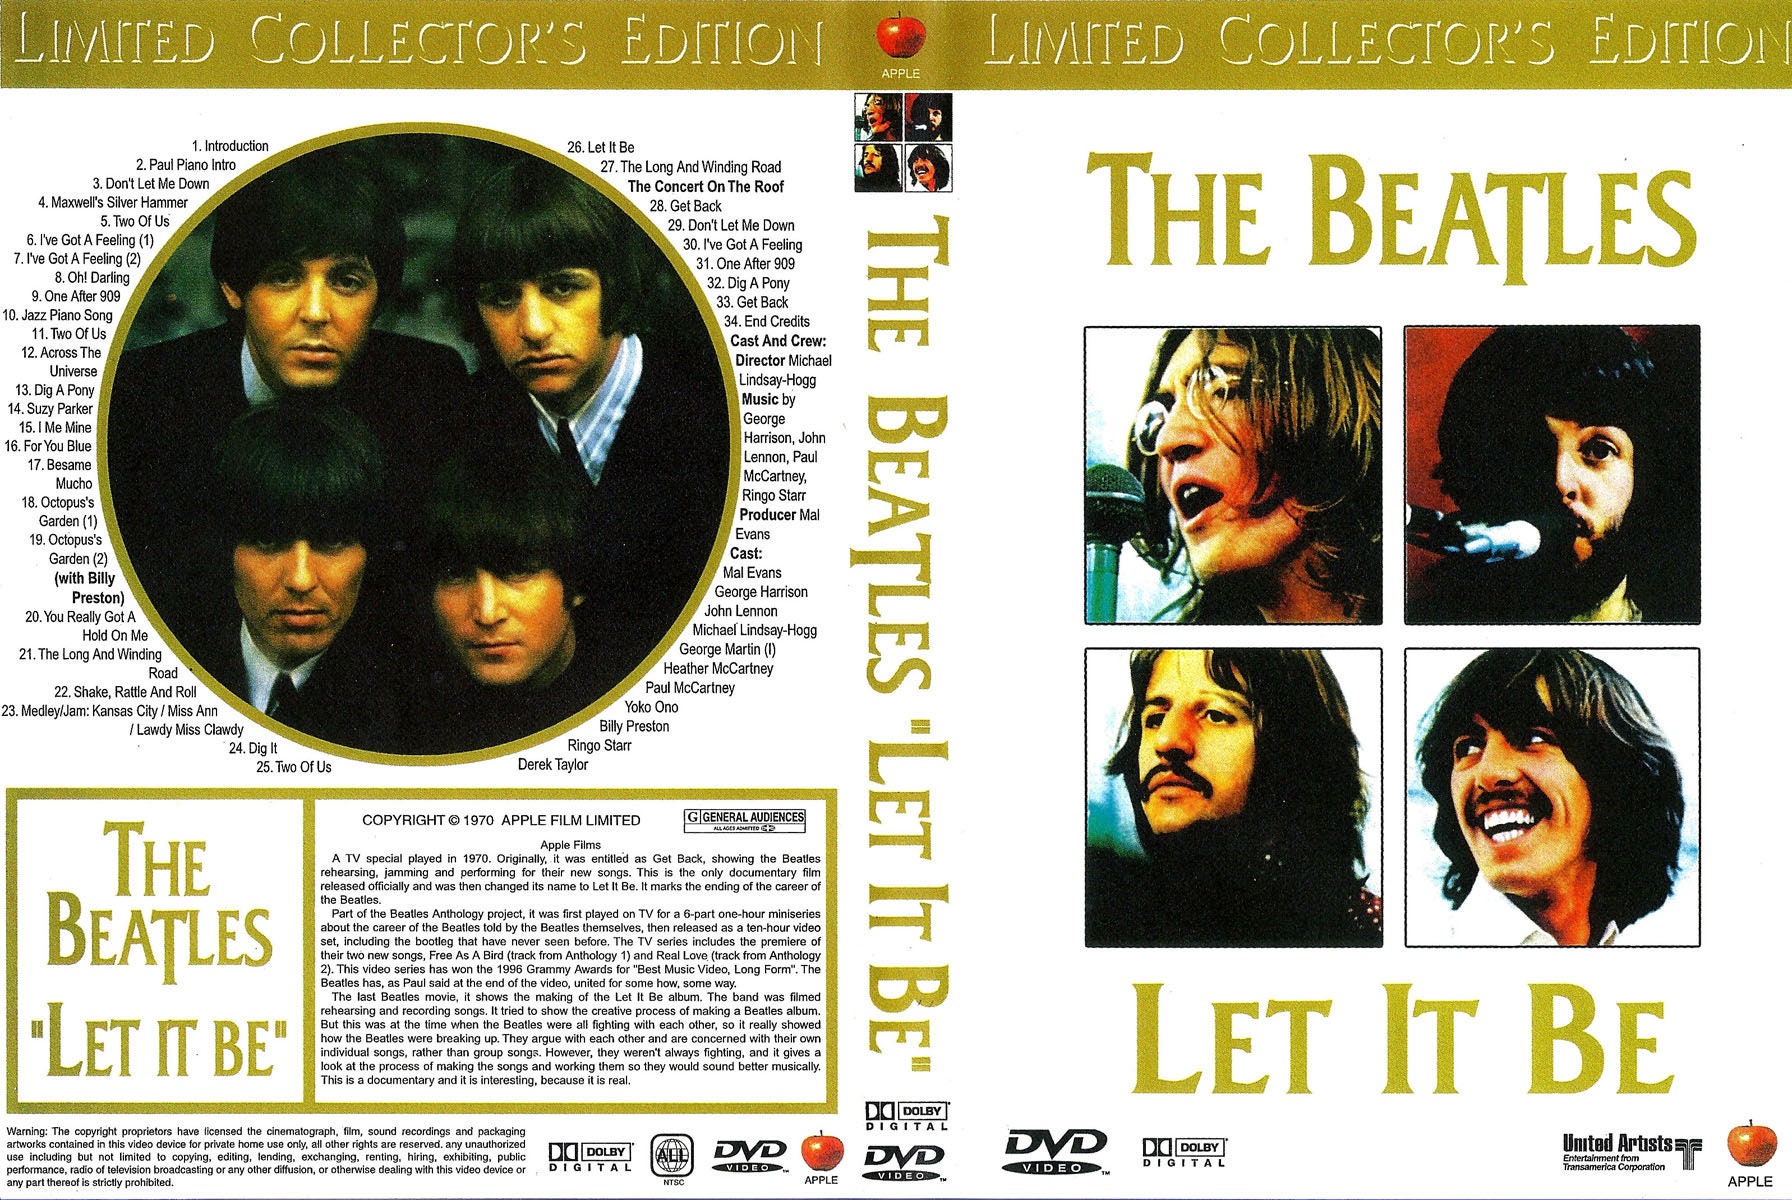 The beatles перевод песен. The Beatles Let it be 1970 обложка. The Beatles обложка для диска. Beatles "the Let it be" Автор. Beatles "the Let it be" Автор слов.